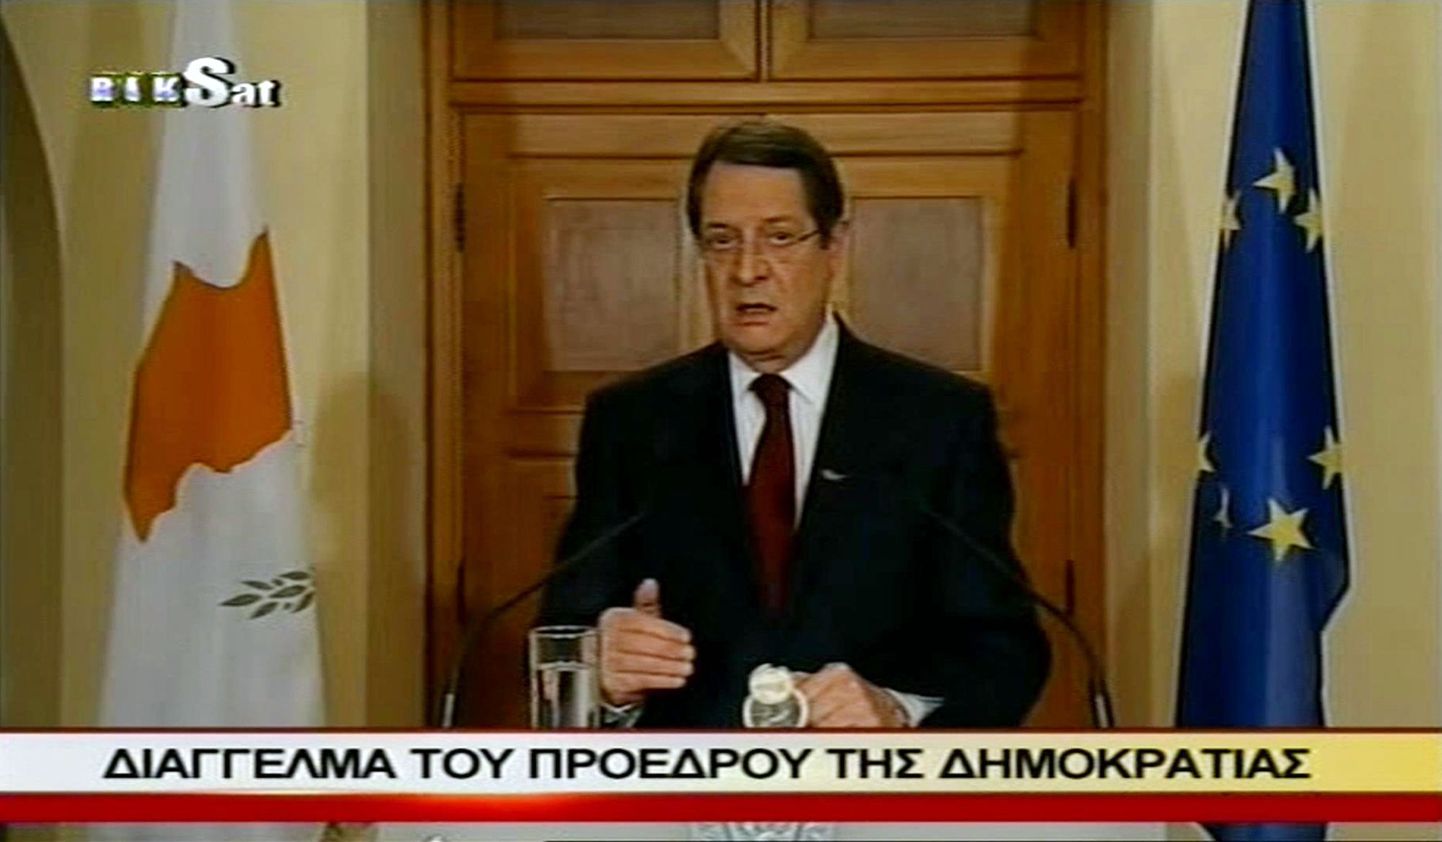 Küprose president Nikos Anastasiades